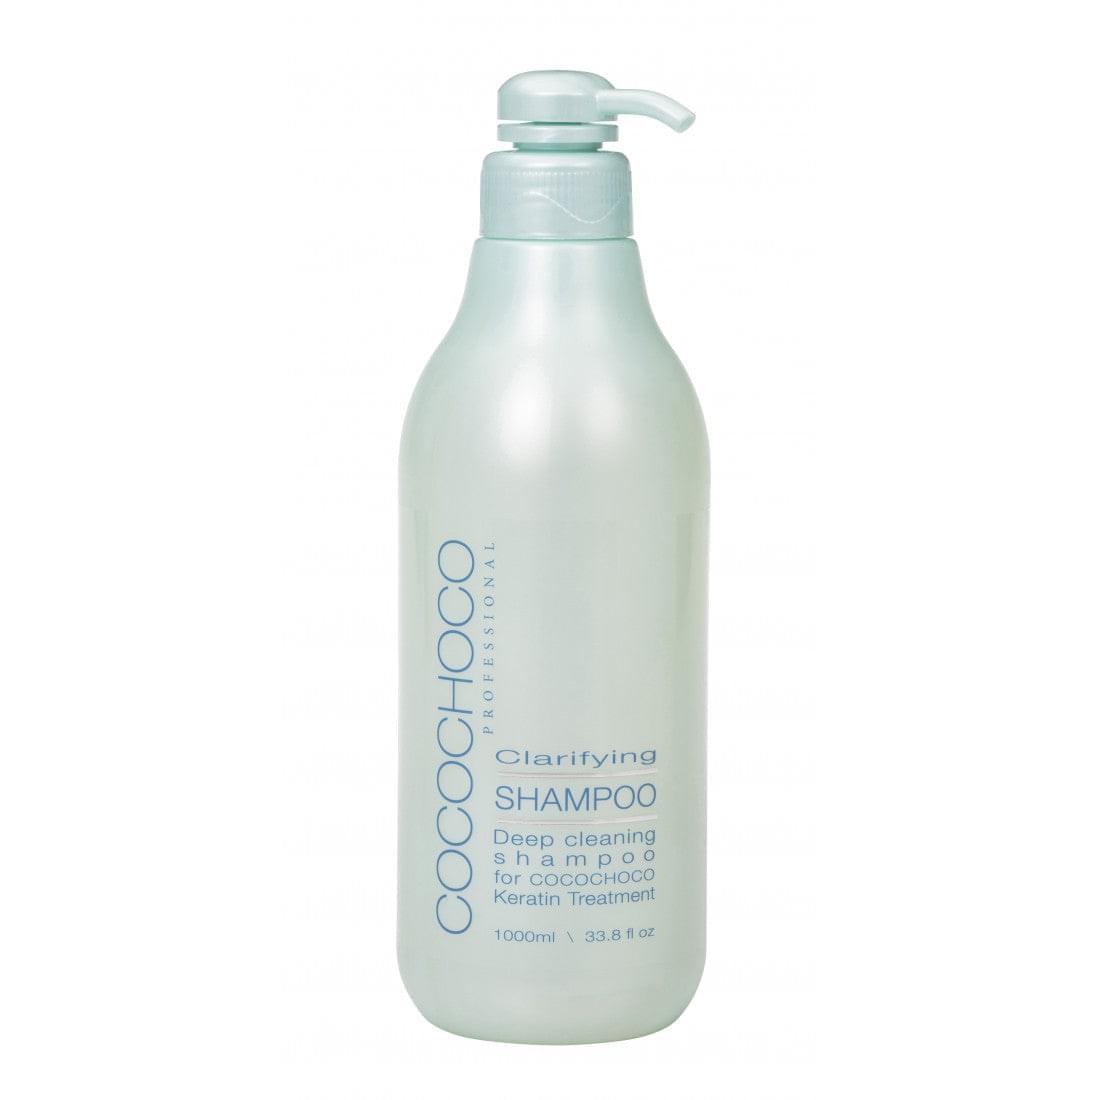 COCOCHOCO Clarifying/Cleansing Shampoo 33.8 fl oz - Healthy shiny and silky look